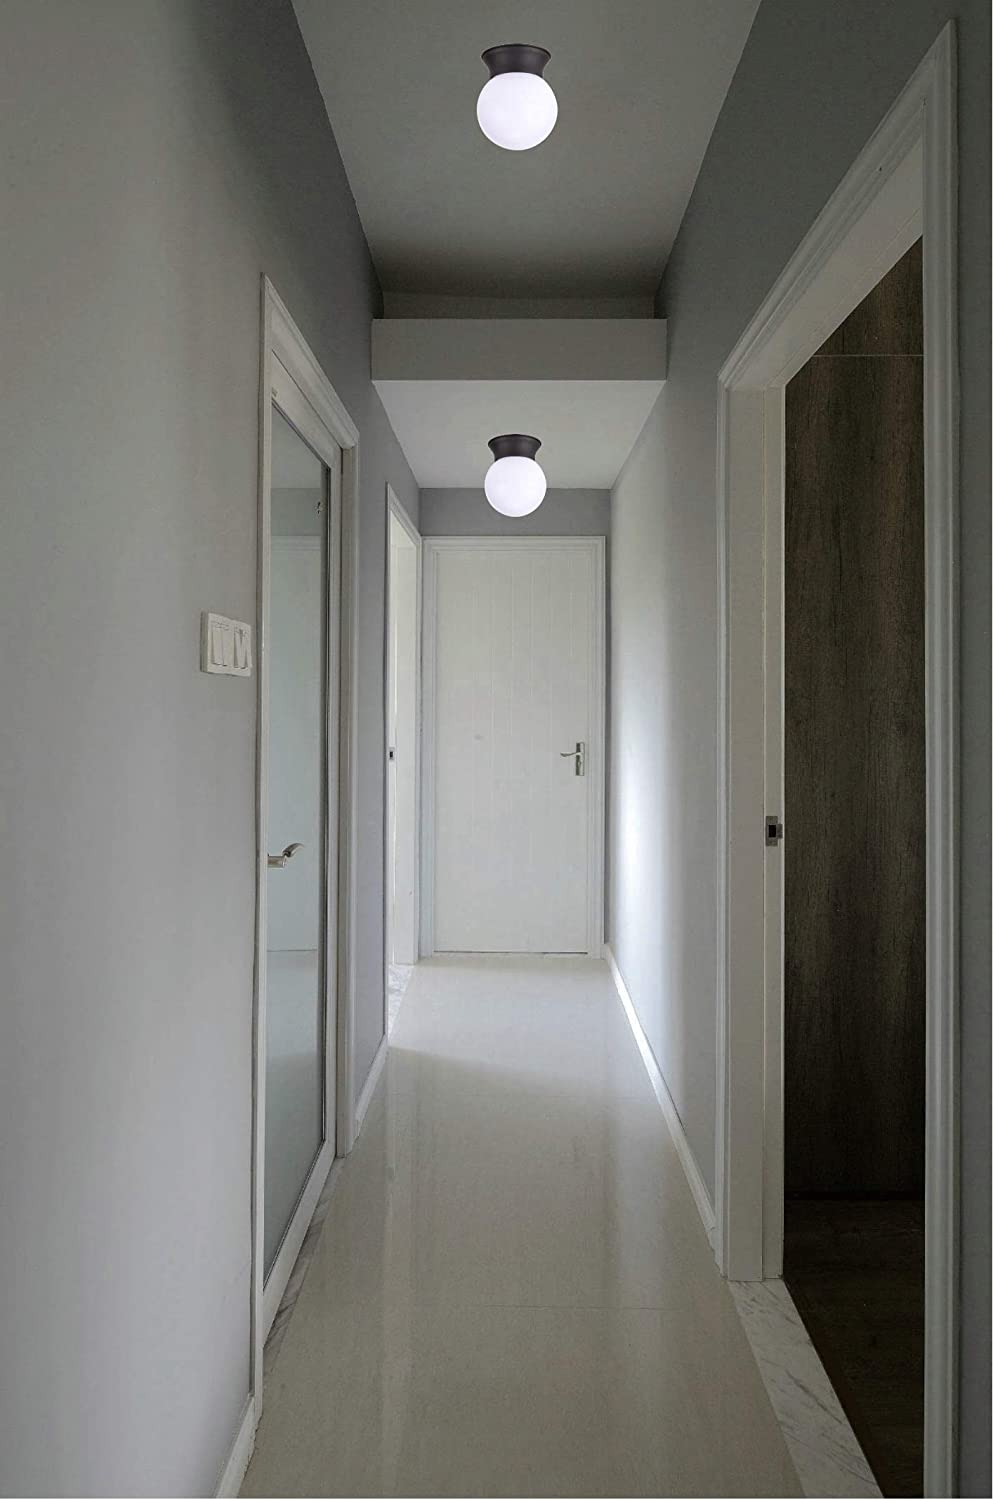 LIT-PaTH LED Flush Mount Ceiling Light Fixture for Indoor and Outdoor, 10.5W 830 Lumen 5000K Daylight White, Aluminum Housing Plus Plastic Cover, 2-Pack